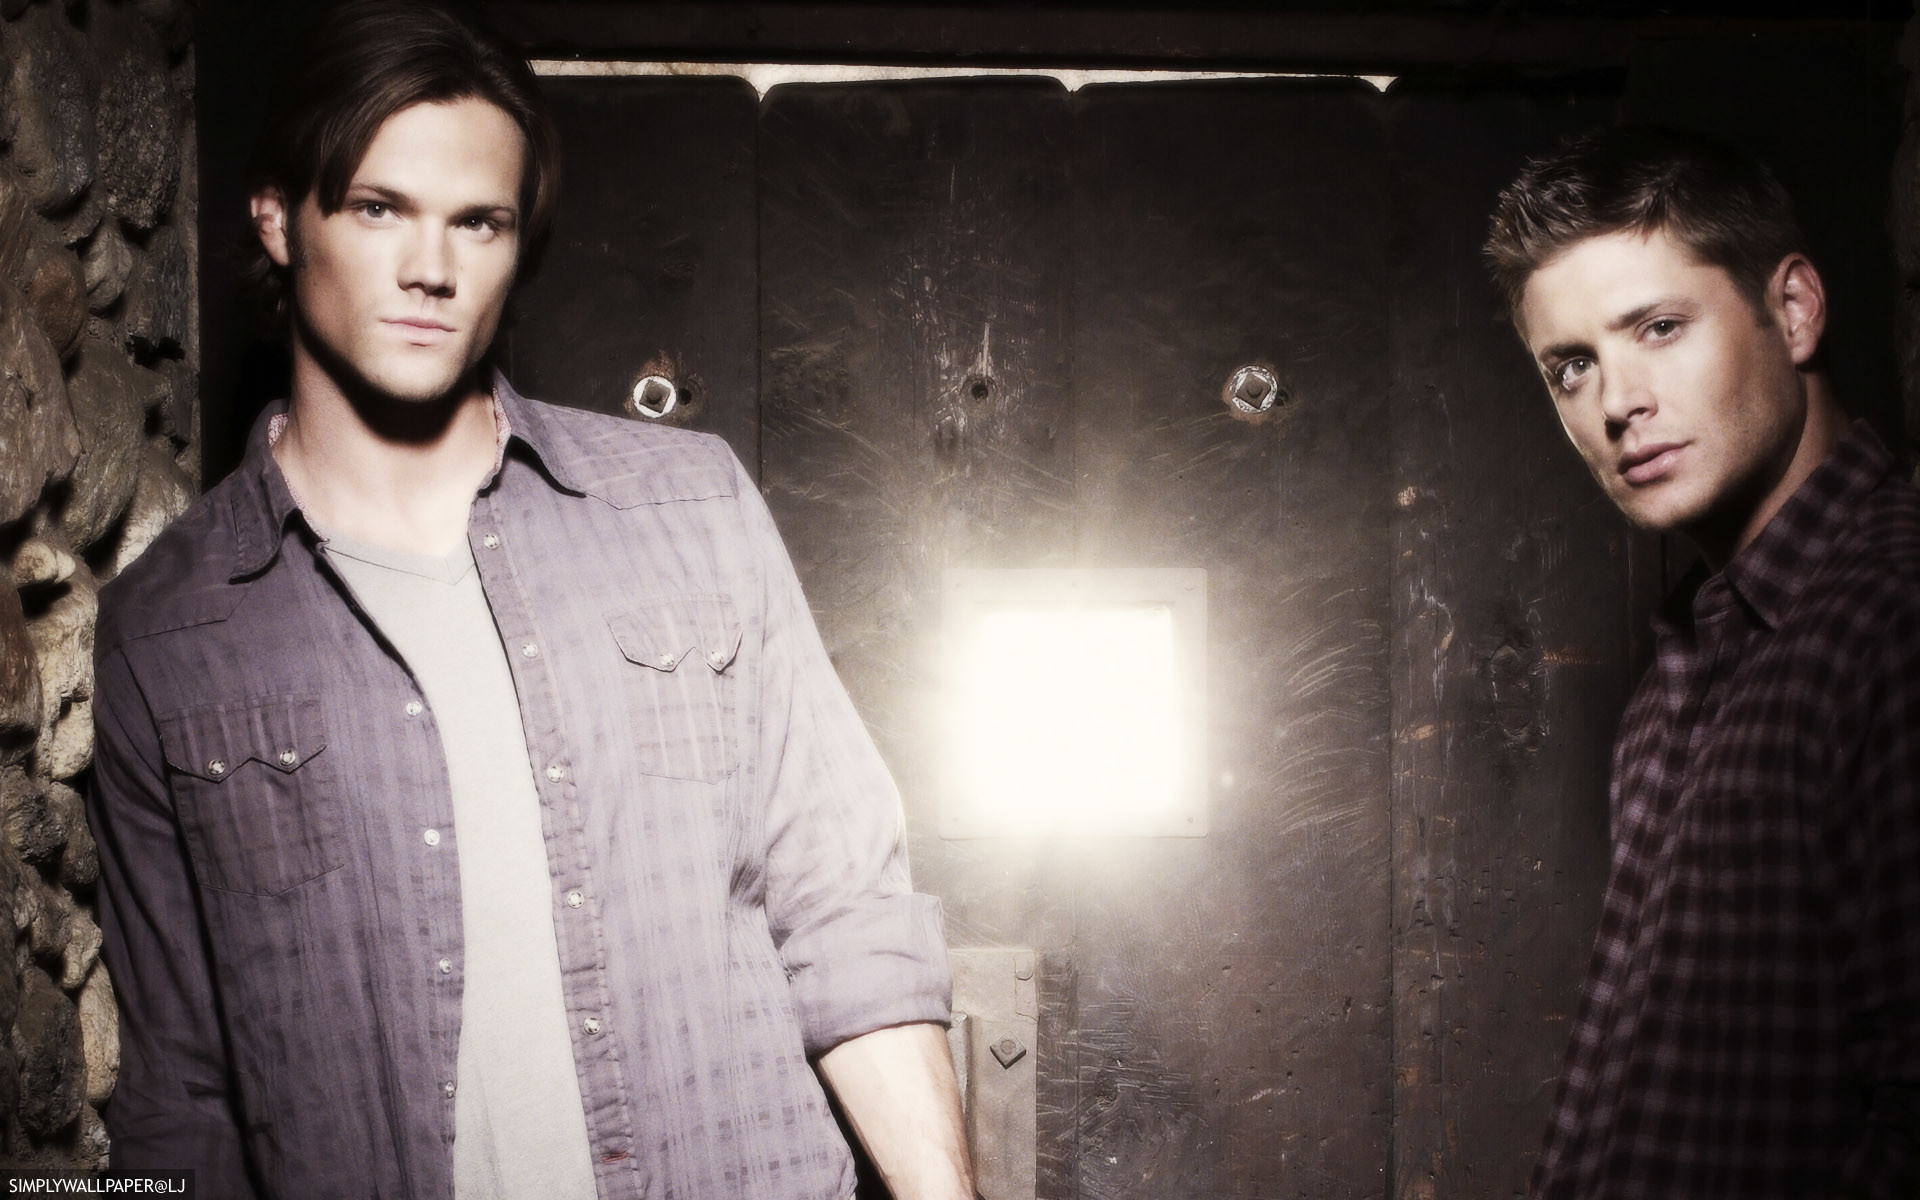 Supernatural desktop background / wallpaper – Sam and Dean Winchester – credit simplywallpaperhistoryjunkie